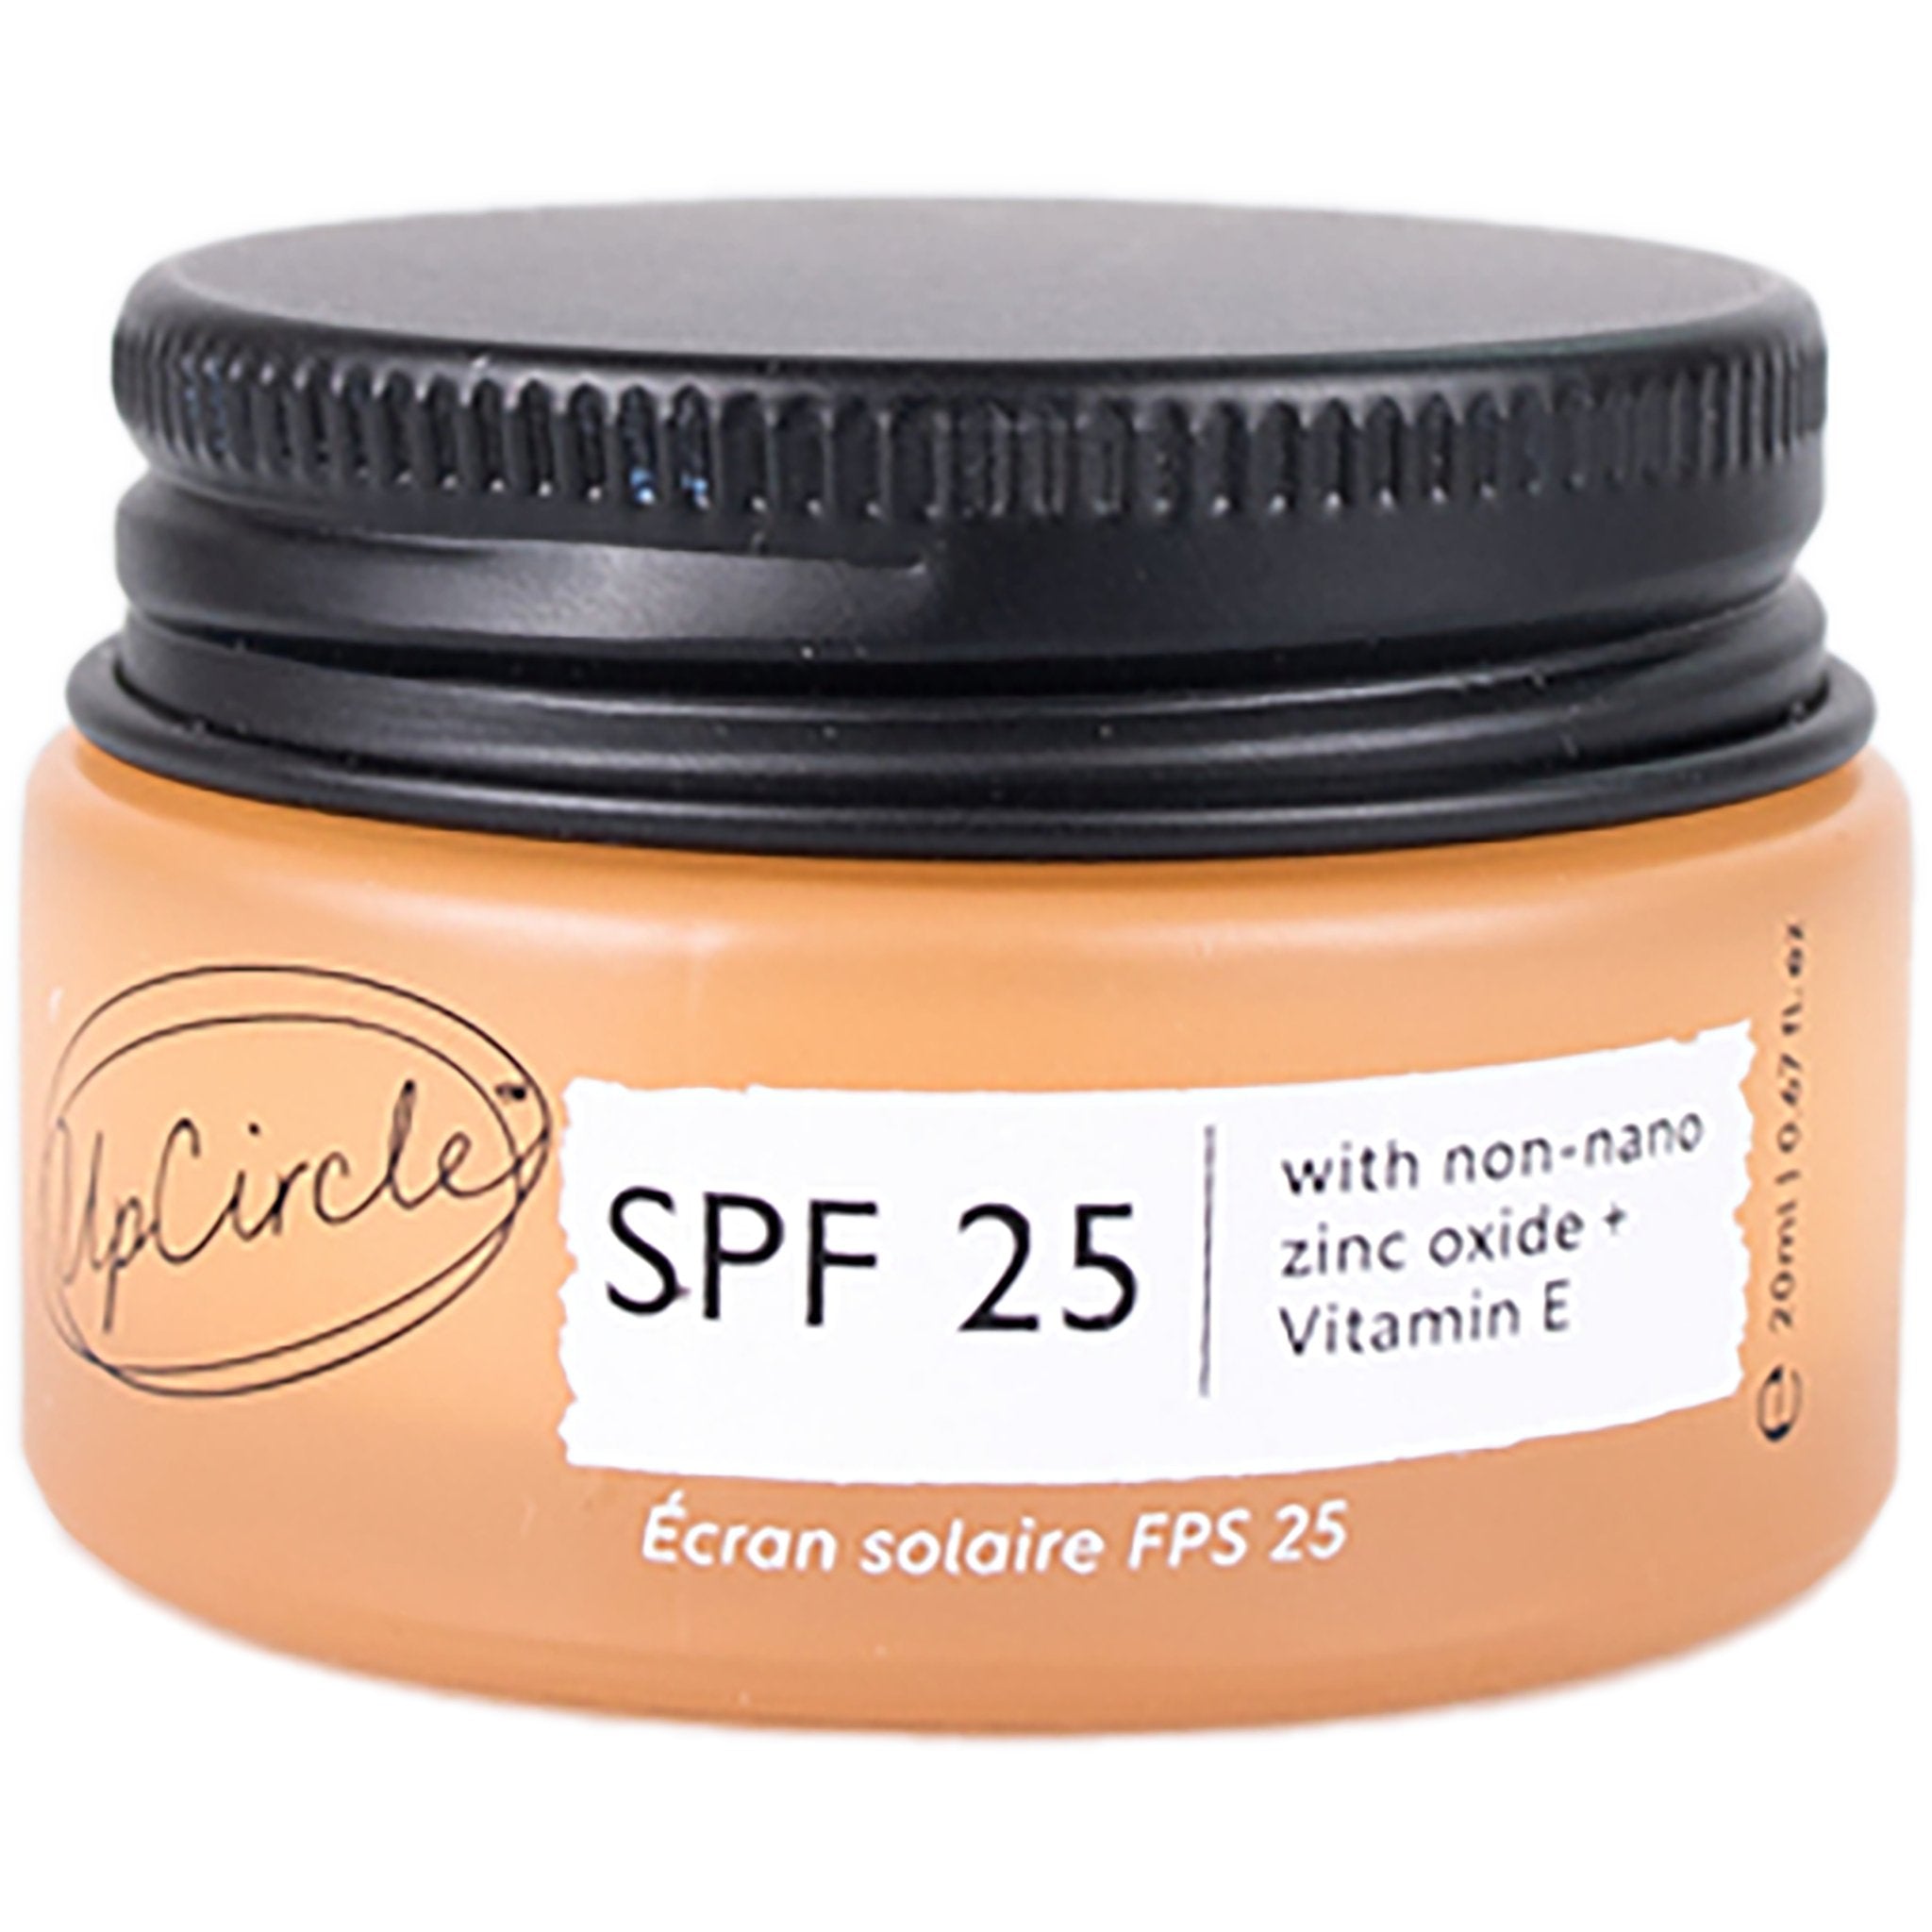 SPF 25 Mineral Sunscreen - mypure.co.uk